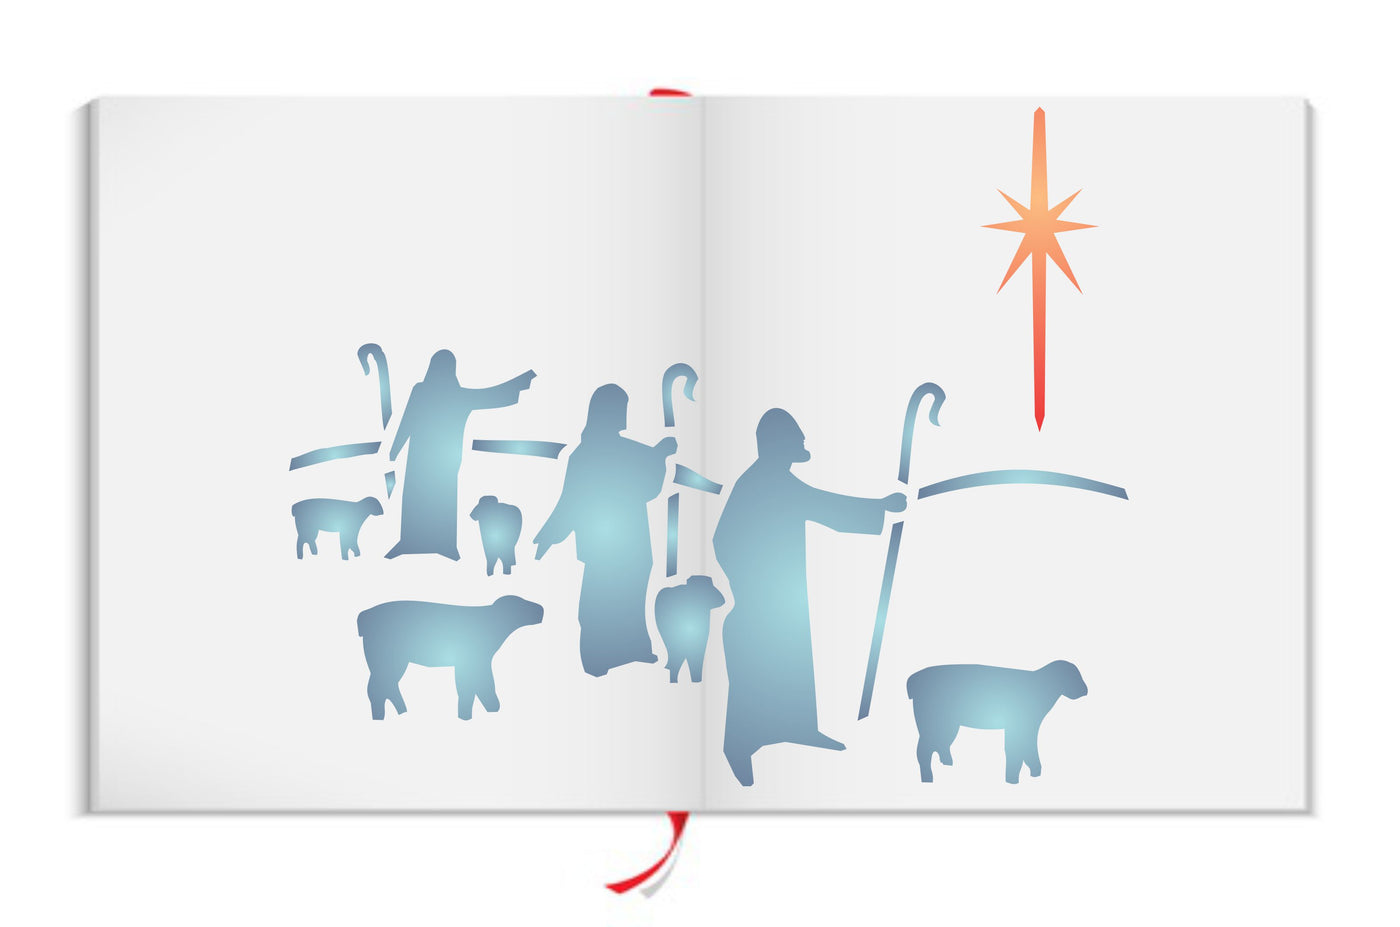 Christmas Shepherds Stencil - Classic Religious Nativity Decor Cards